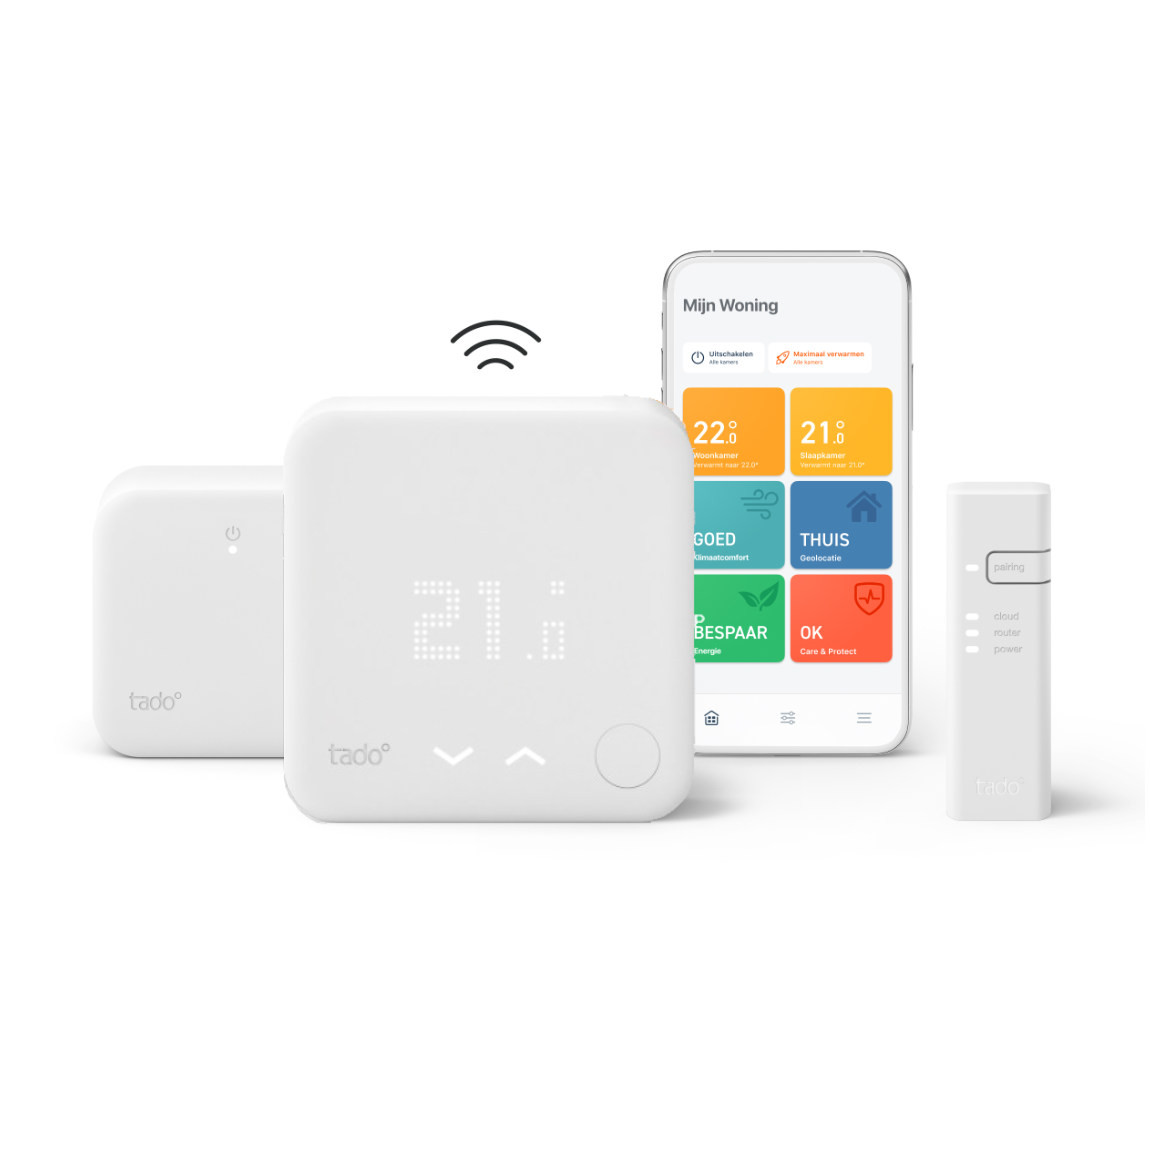 verrassing Correct Uitgraving tado° Wireless Smart Thermostat Starter Kit V3+ | tink